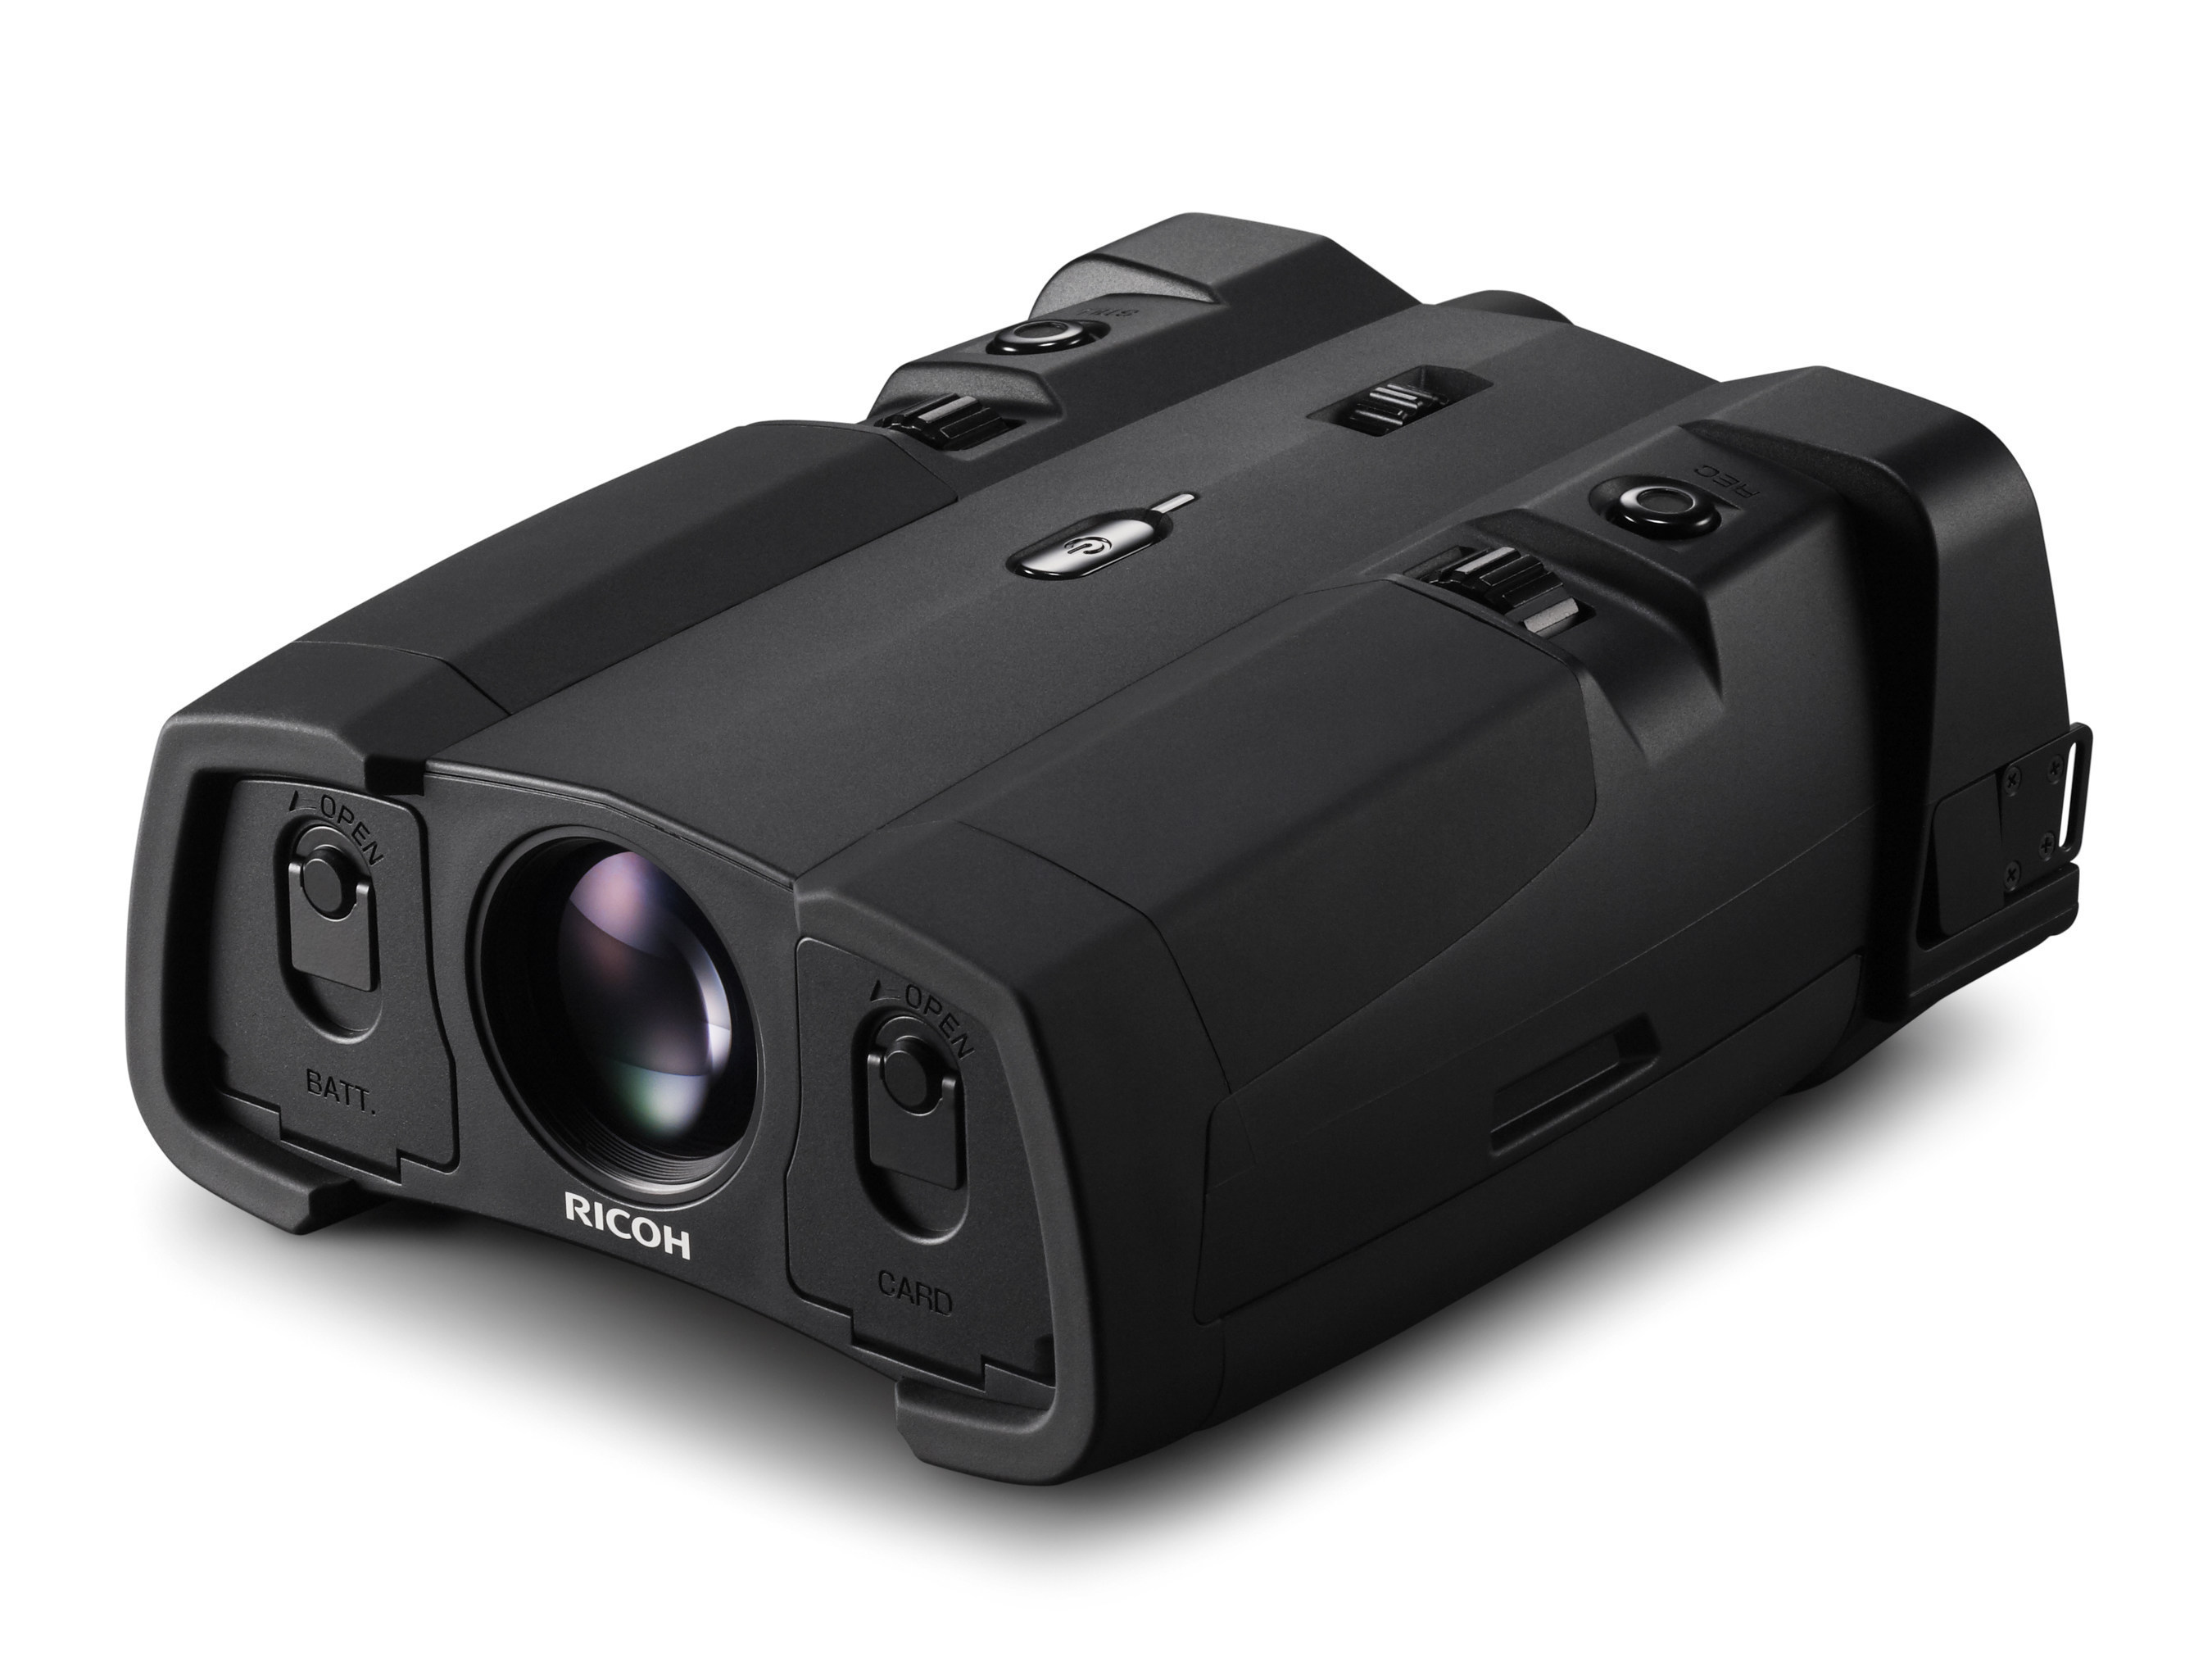 New RICOH NV-10A binoculars penetrate fog, smoke and darkness